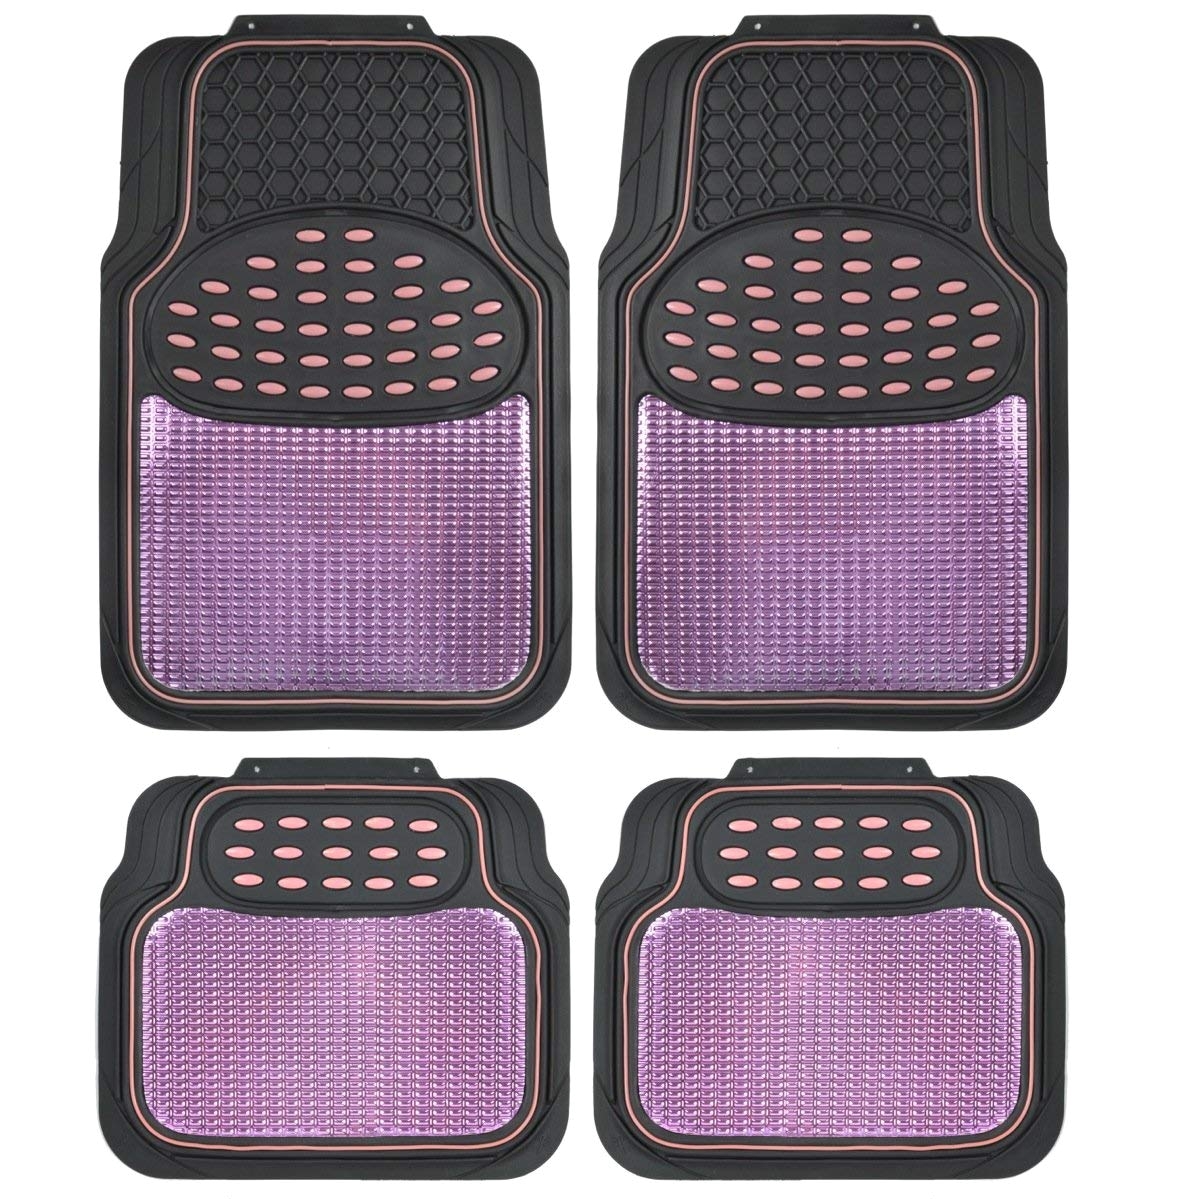 amazon com bdk metallic rubber floor mats for car suv truck semi trimmable 2 tone color heavy duty protection pink black automotive